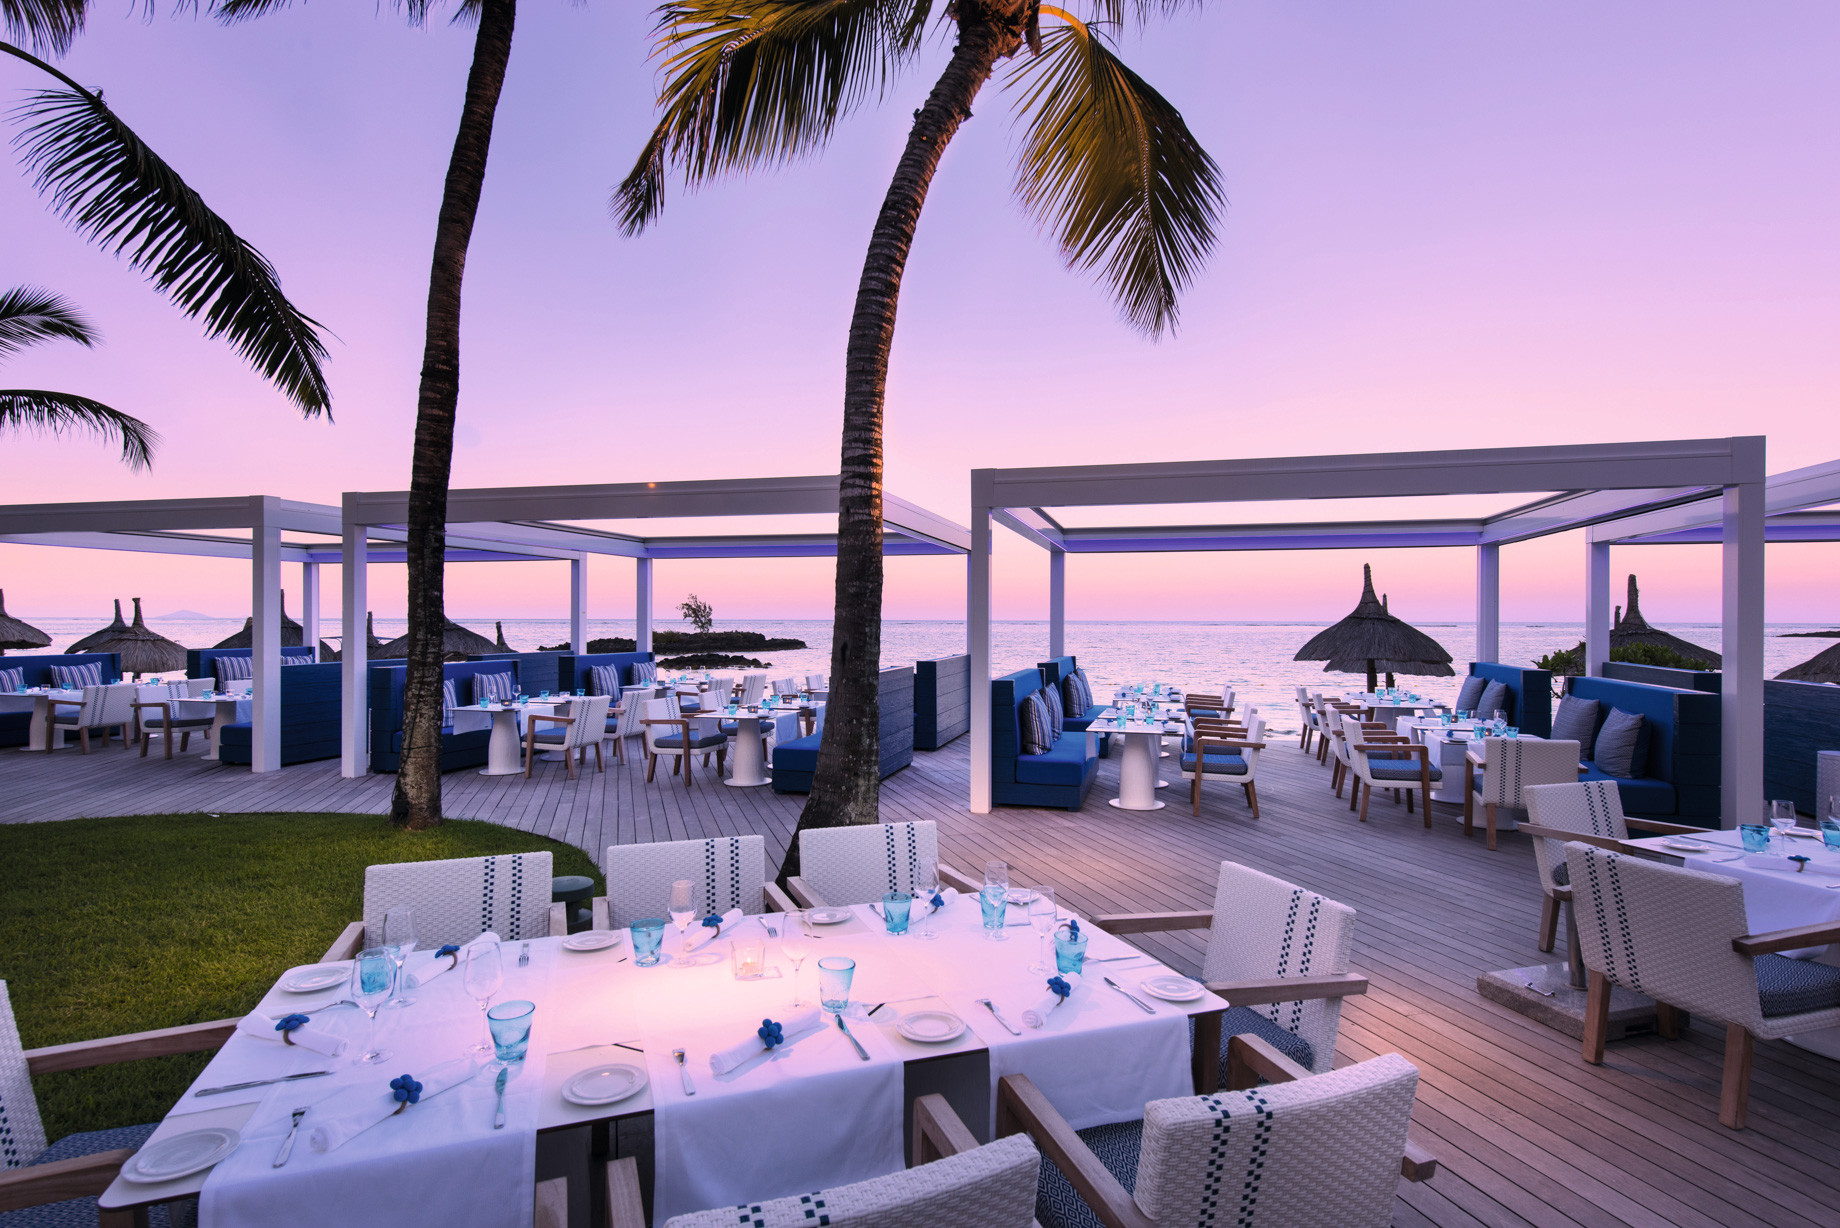 Constance Belle Mare Plage Resort – Mauritius – Indigo Restaurant Outdoor Dining